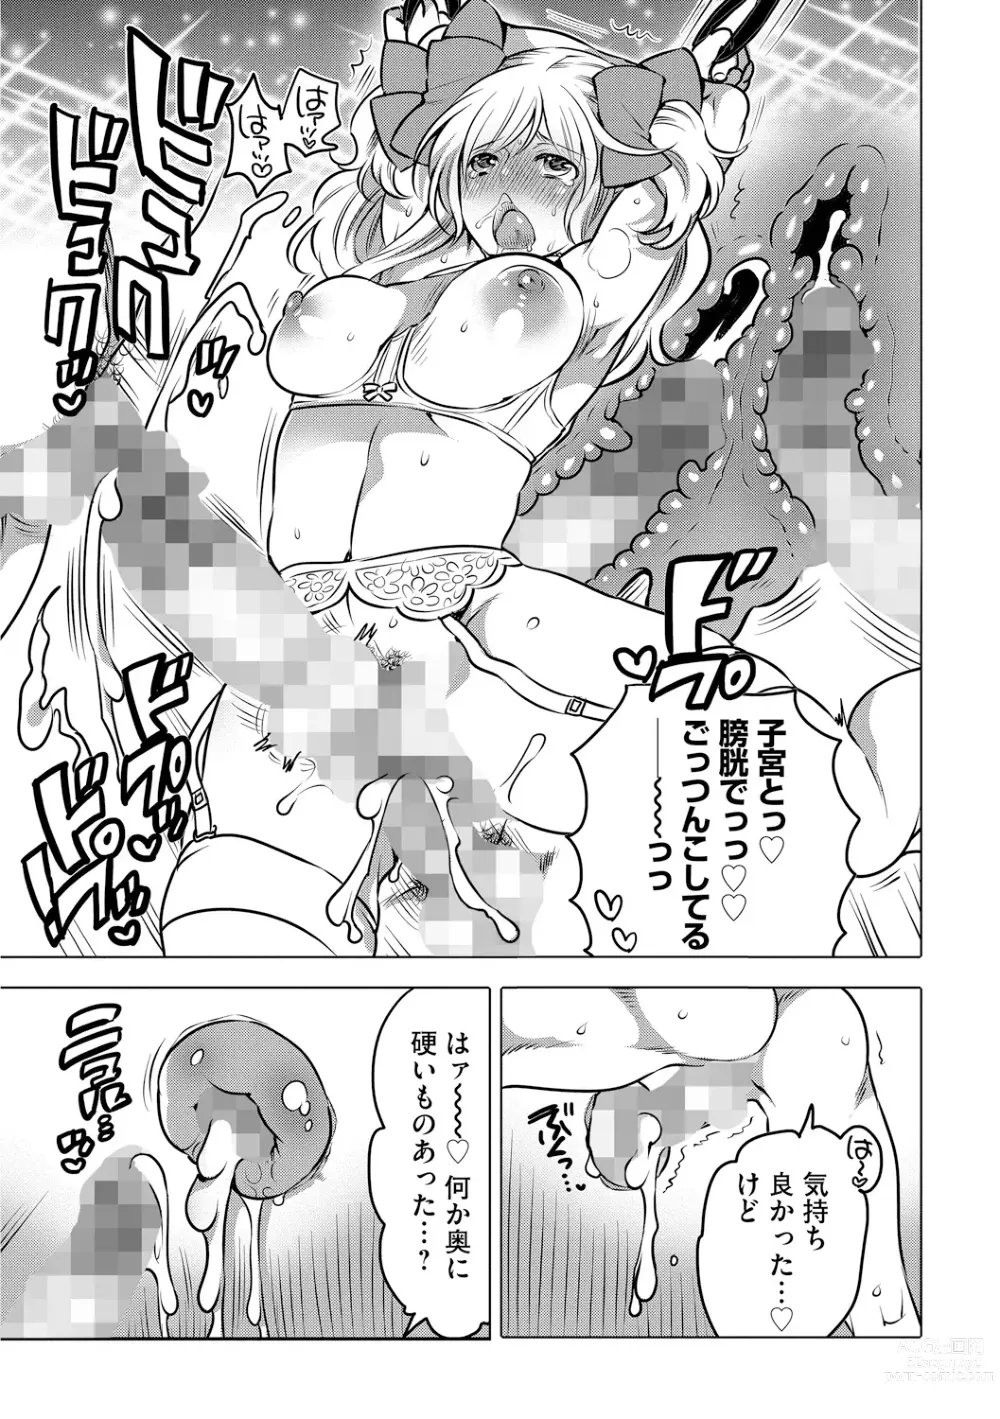 Page 180 of manga Futanari Onee-chan wa Bokura no Omocha  - FUTANARI SISTER IS OUR TOYS